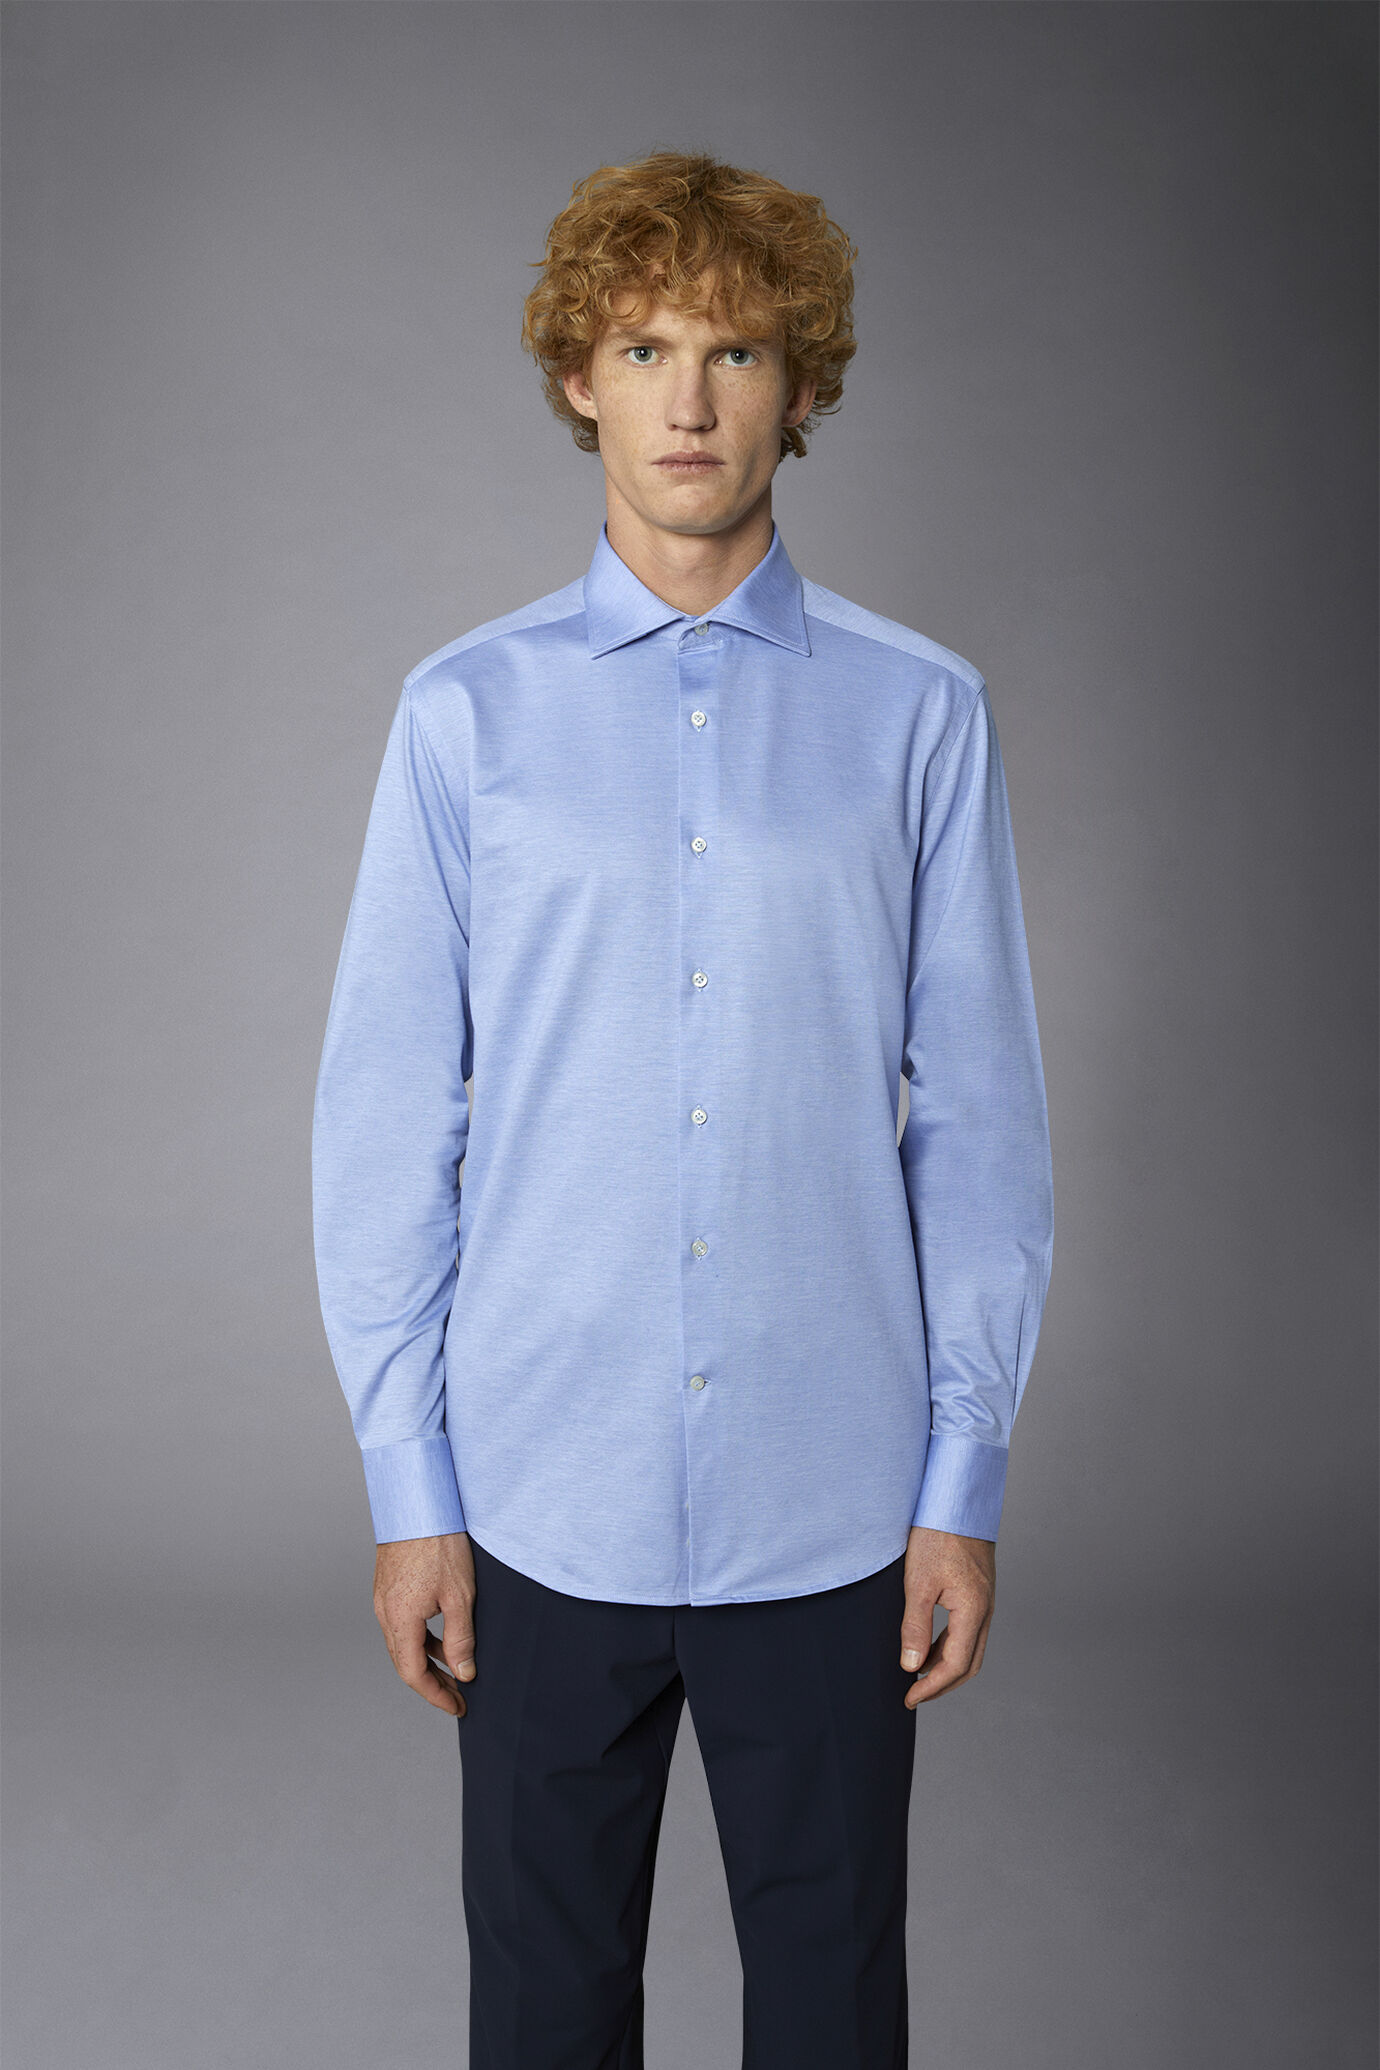 Klassisches geschlechtsloses Jersey-Shirt Französischer Kragen Bequeme Passform Bedruckter Melange-Stoff image number 2